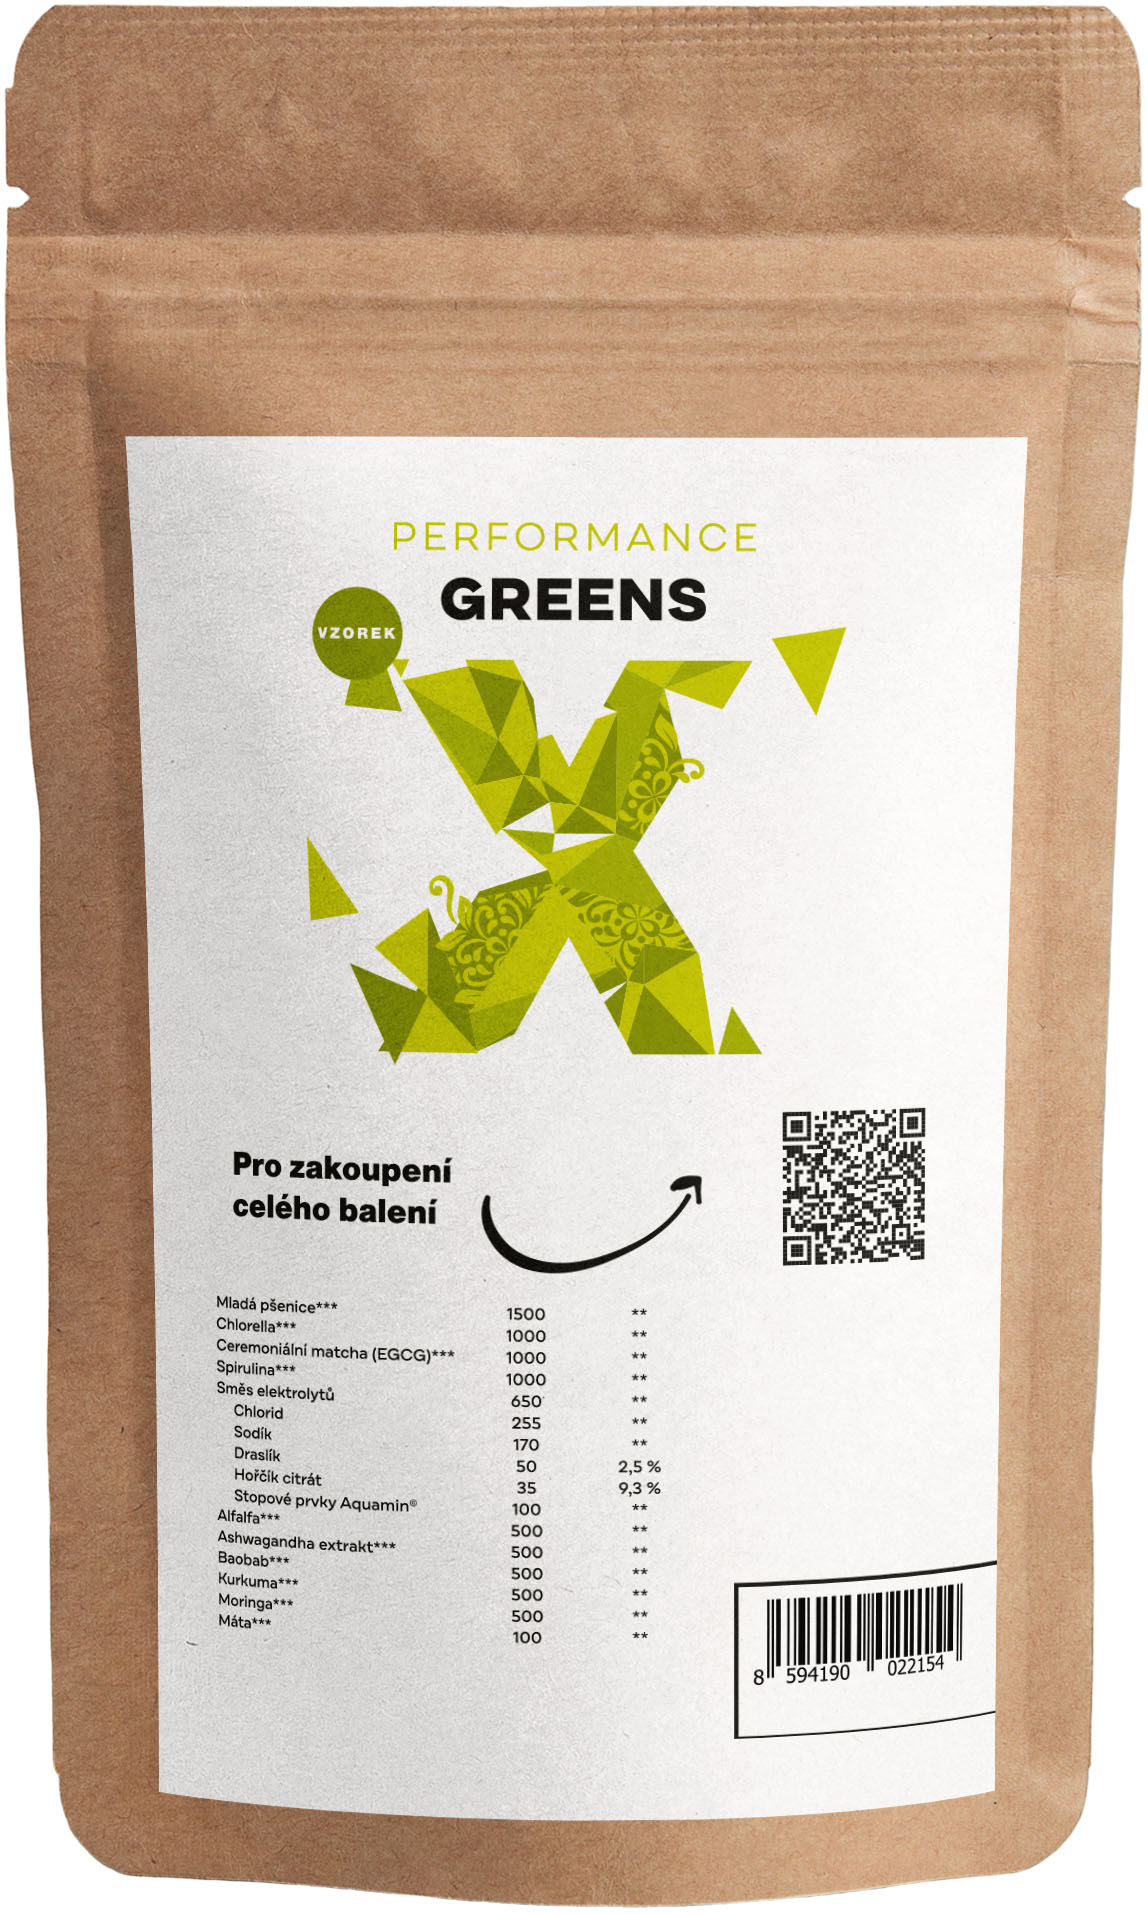 BrainMax Performance Greens, VZOREK